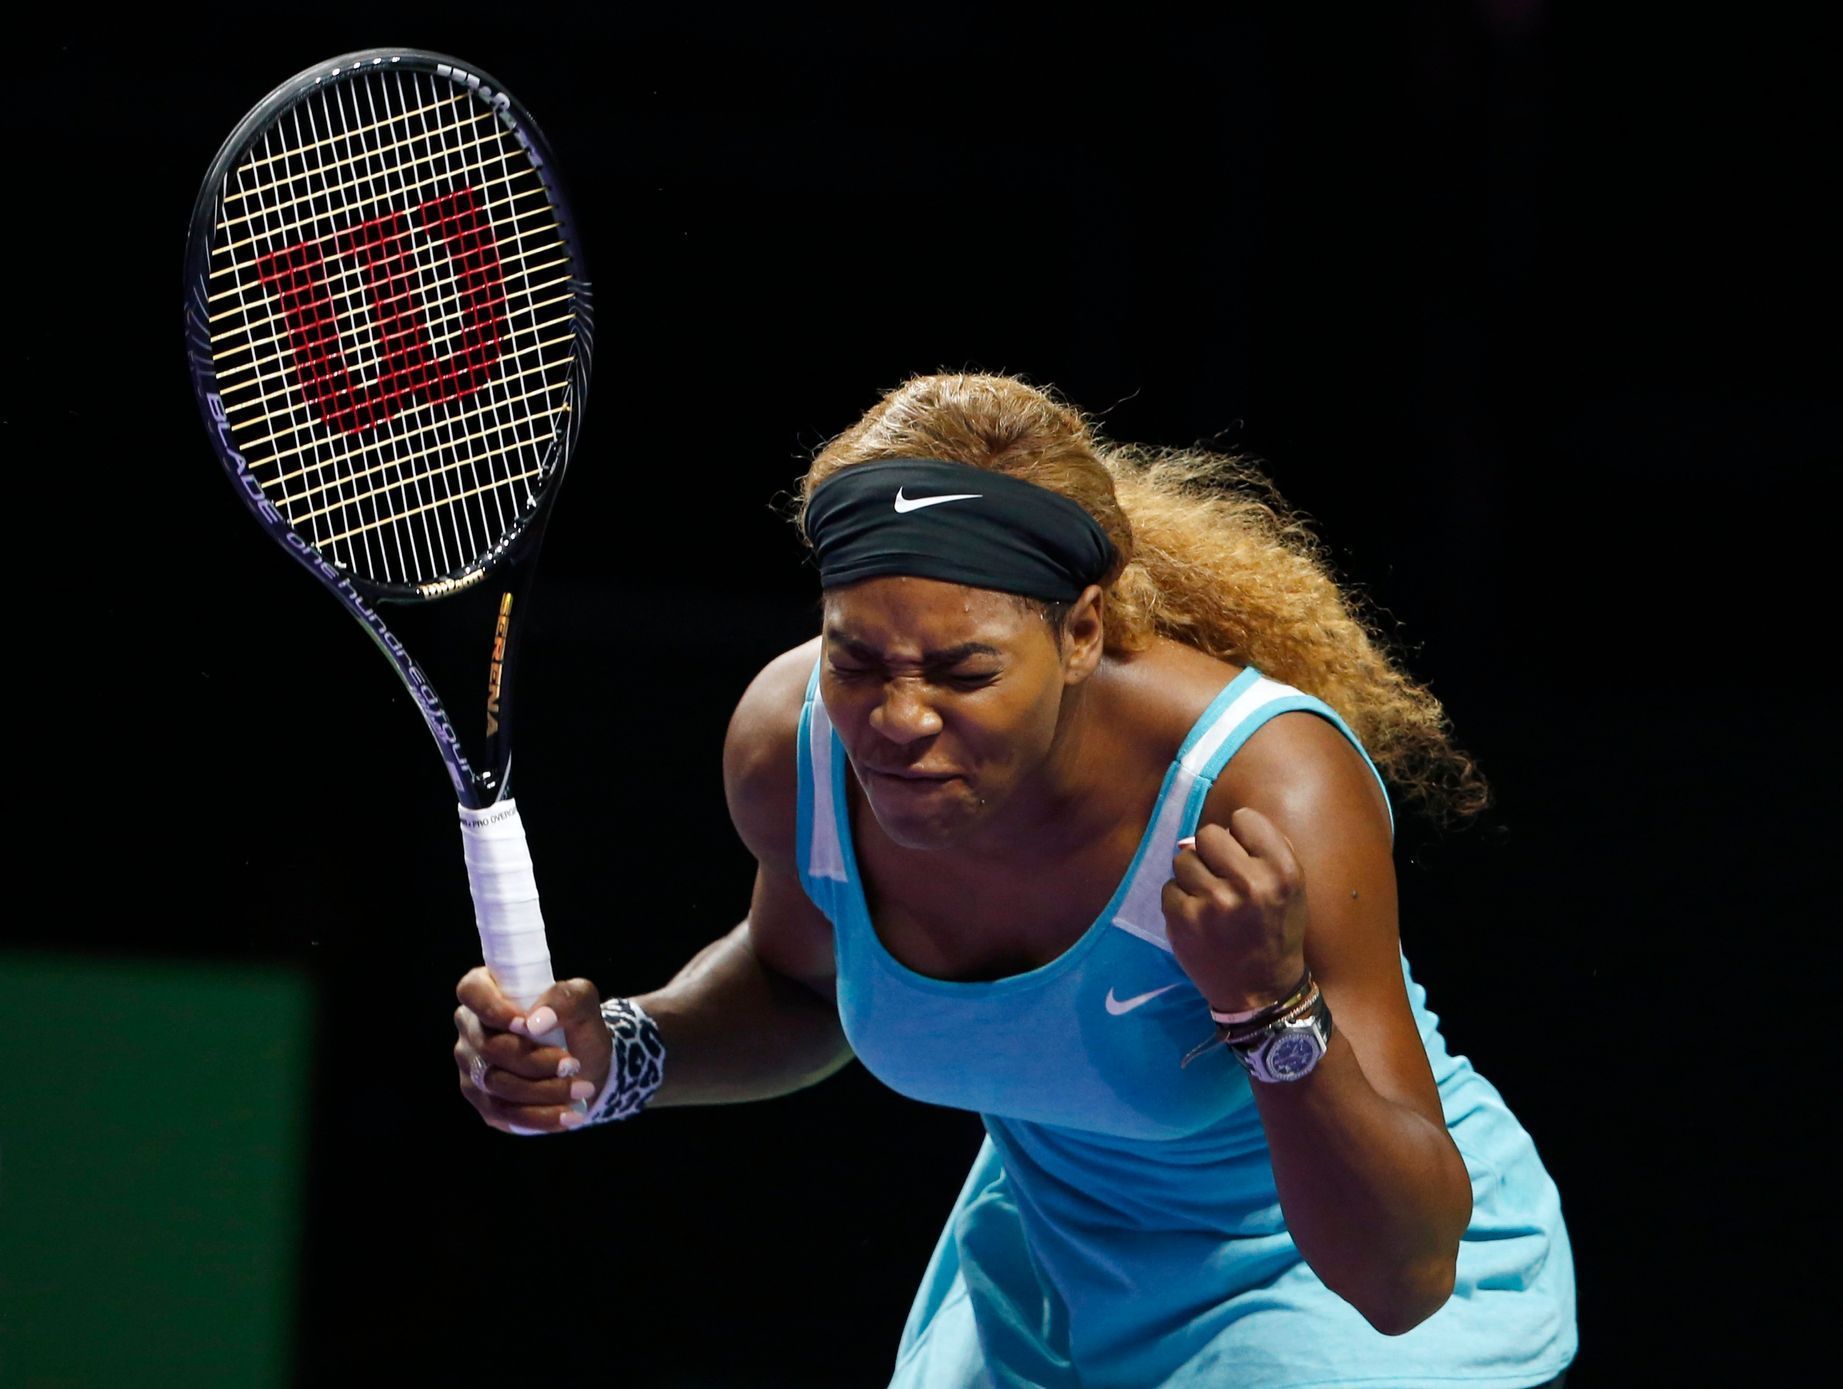 Naštvaná Serena Williamsová při výprasku od Halepové na Turnaji mistryň 2014